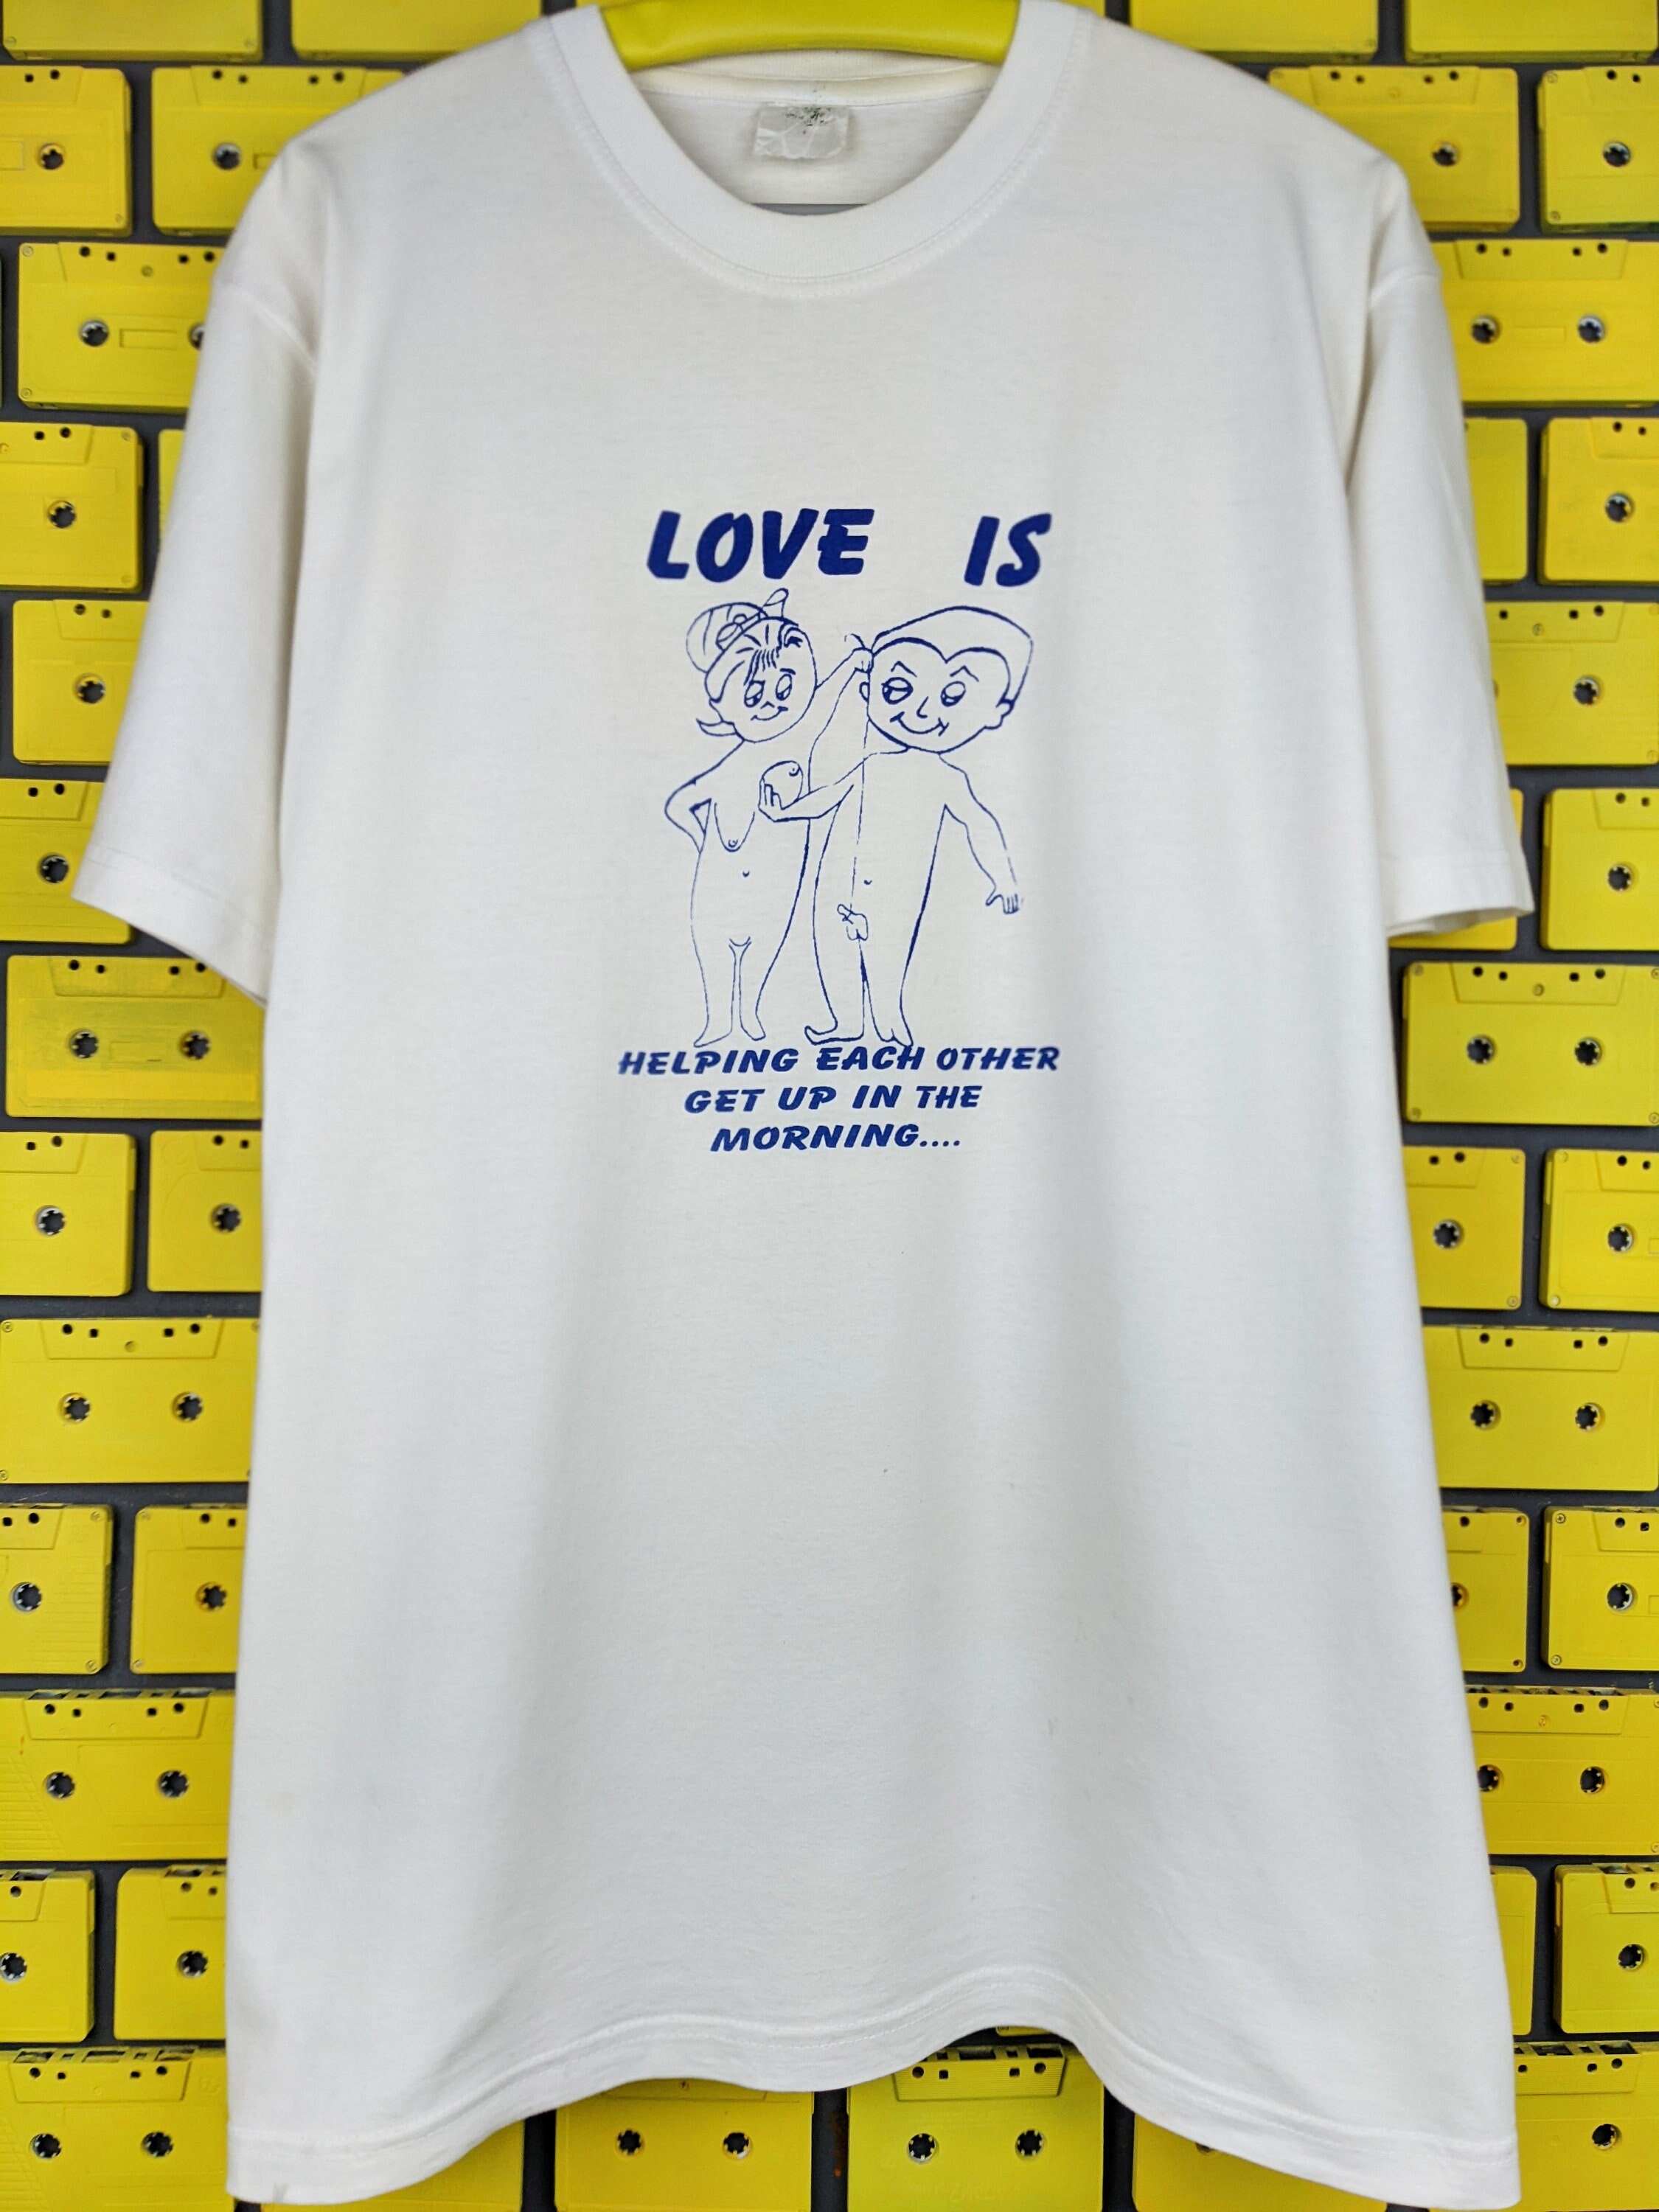 Vintage 90s Love is T-shirt Funny Adult Sex Joke Humor